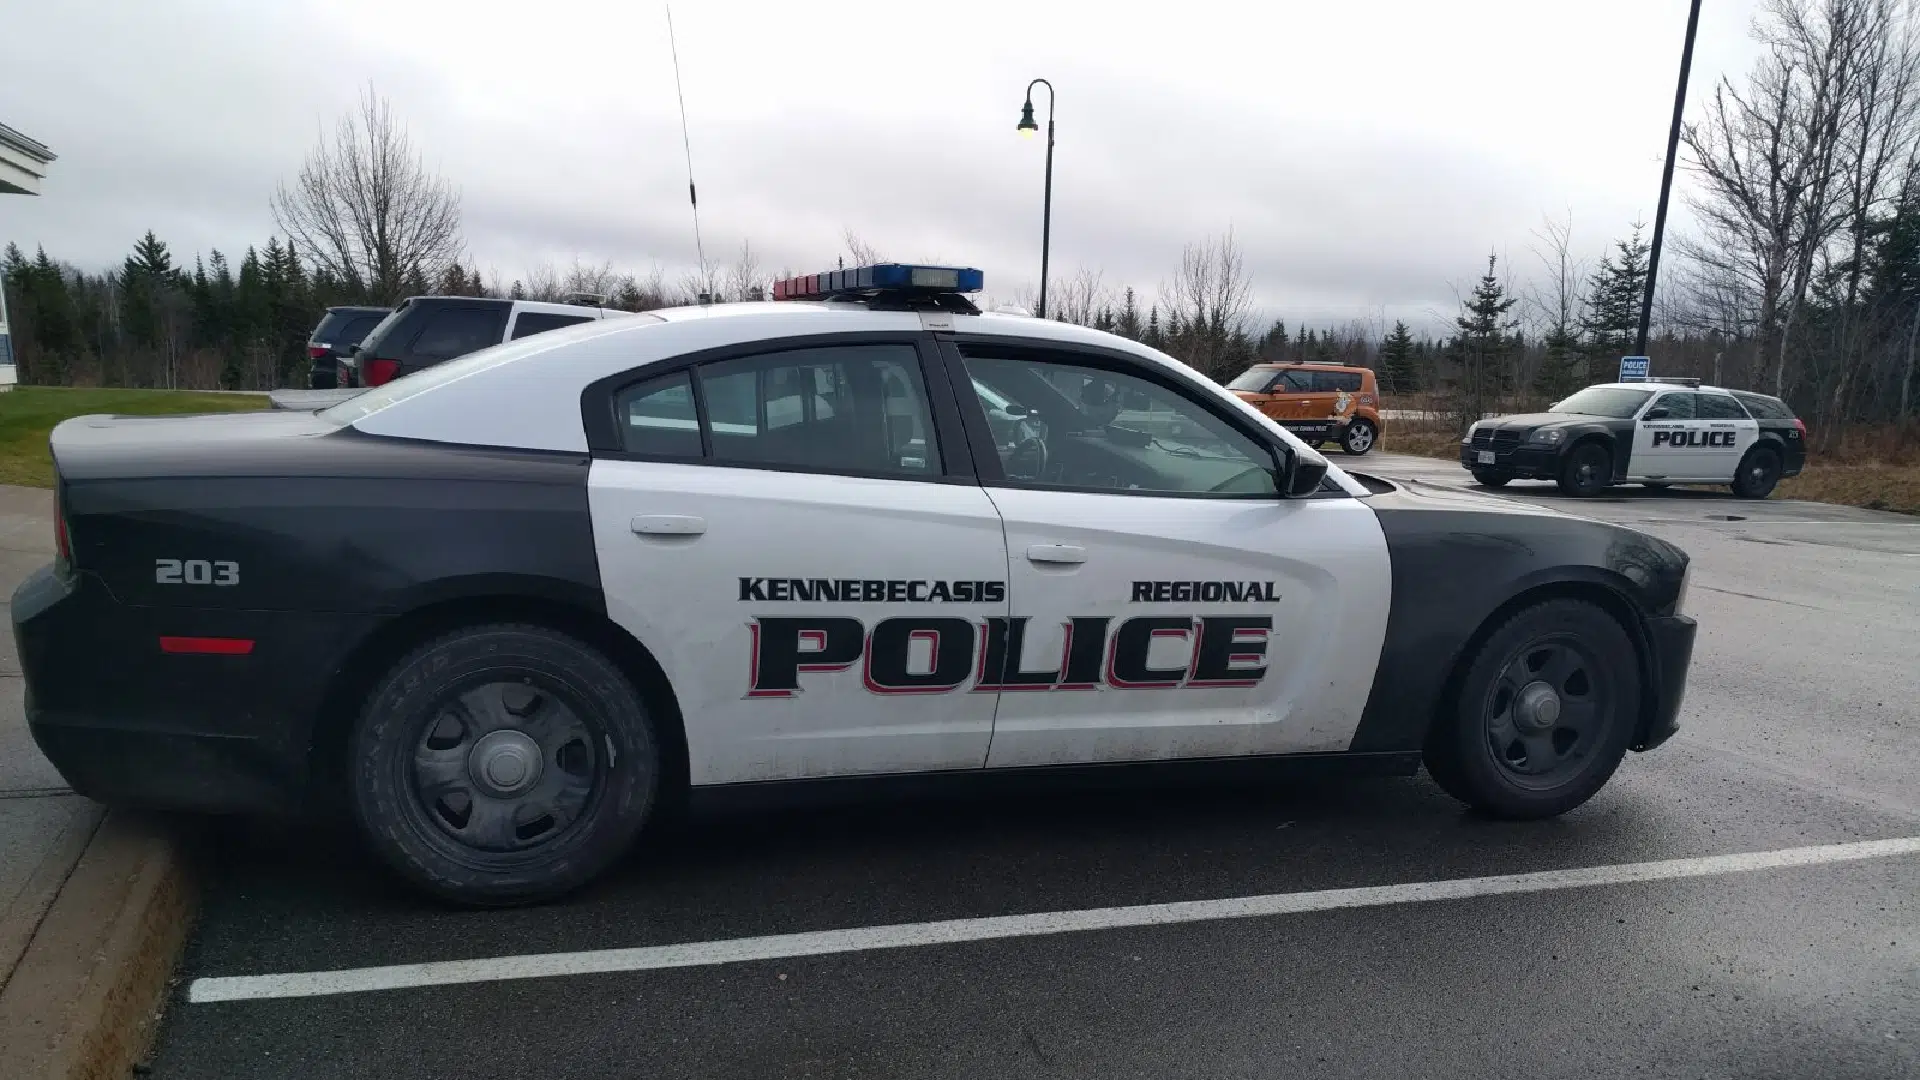 Kennebecasis police seek candidates for sponsorship program